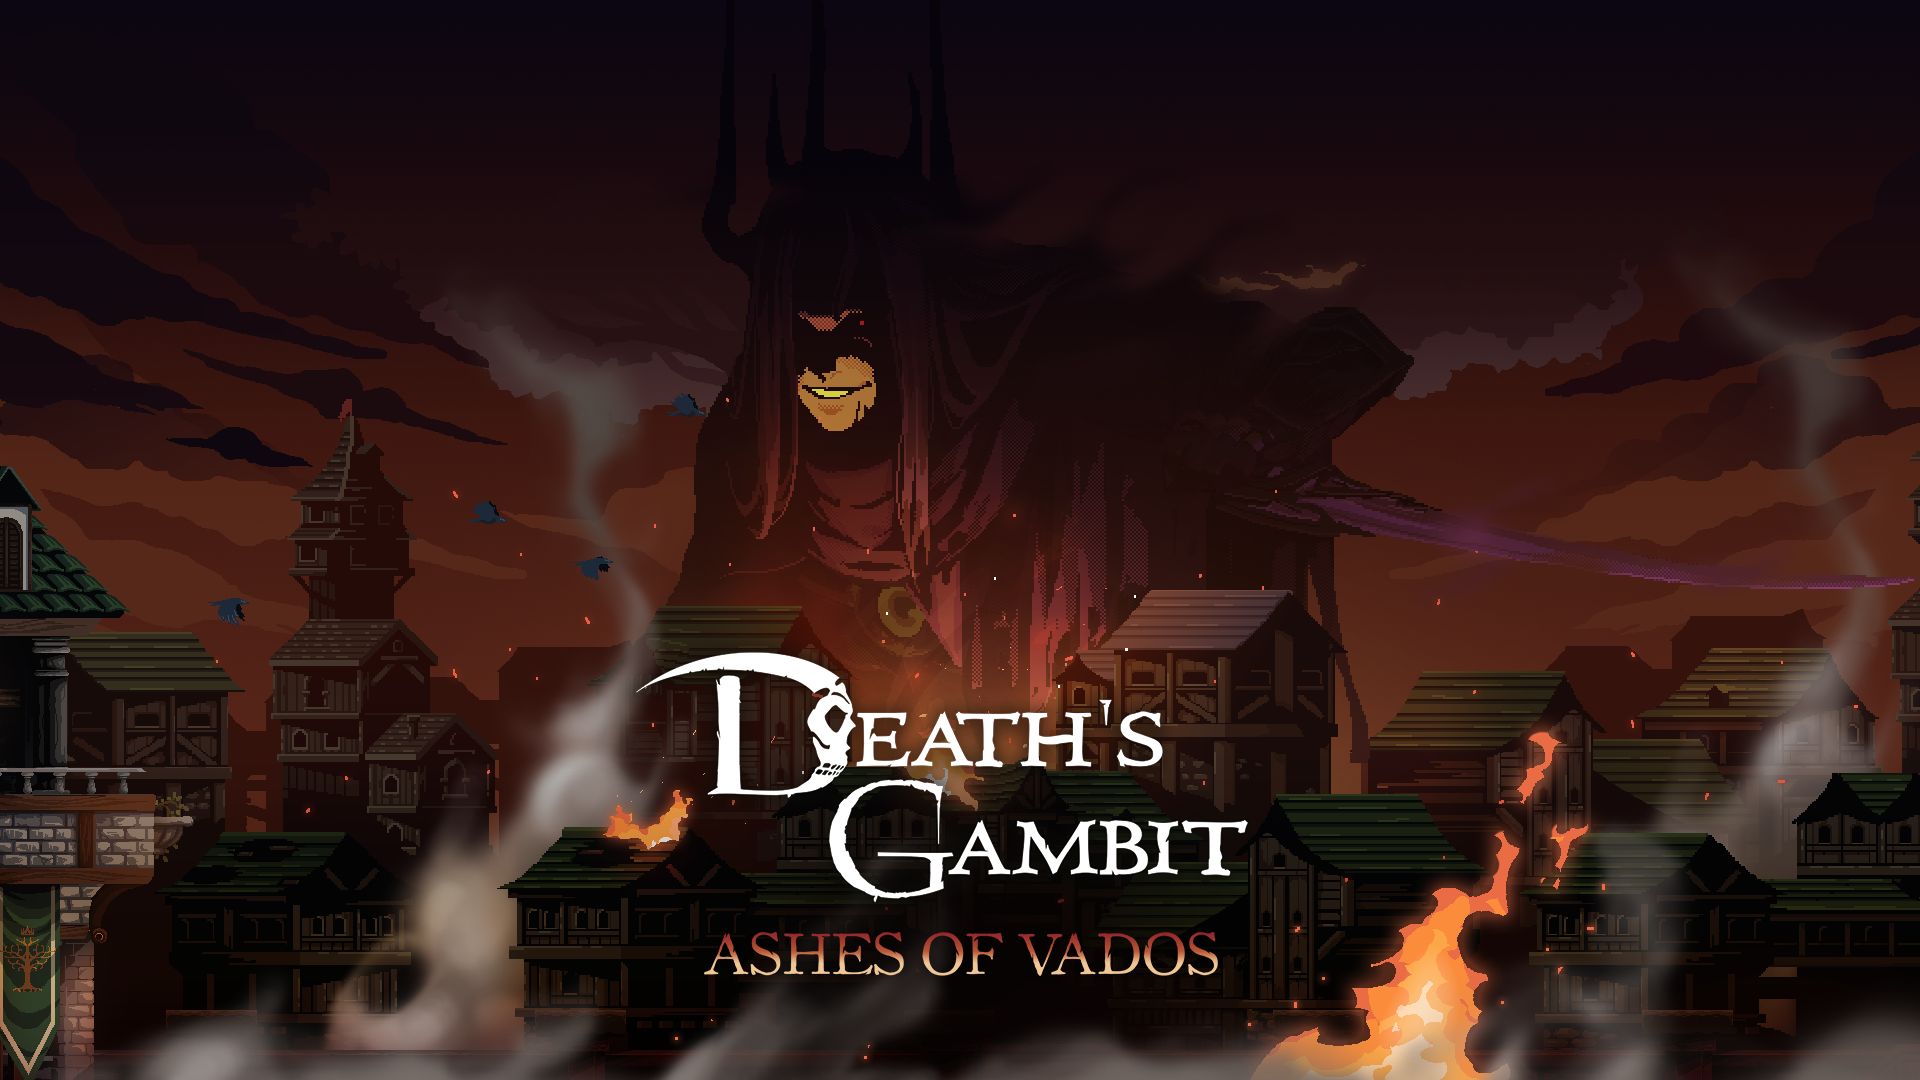 Death's Gambit - Adult Swim Games